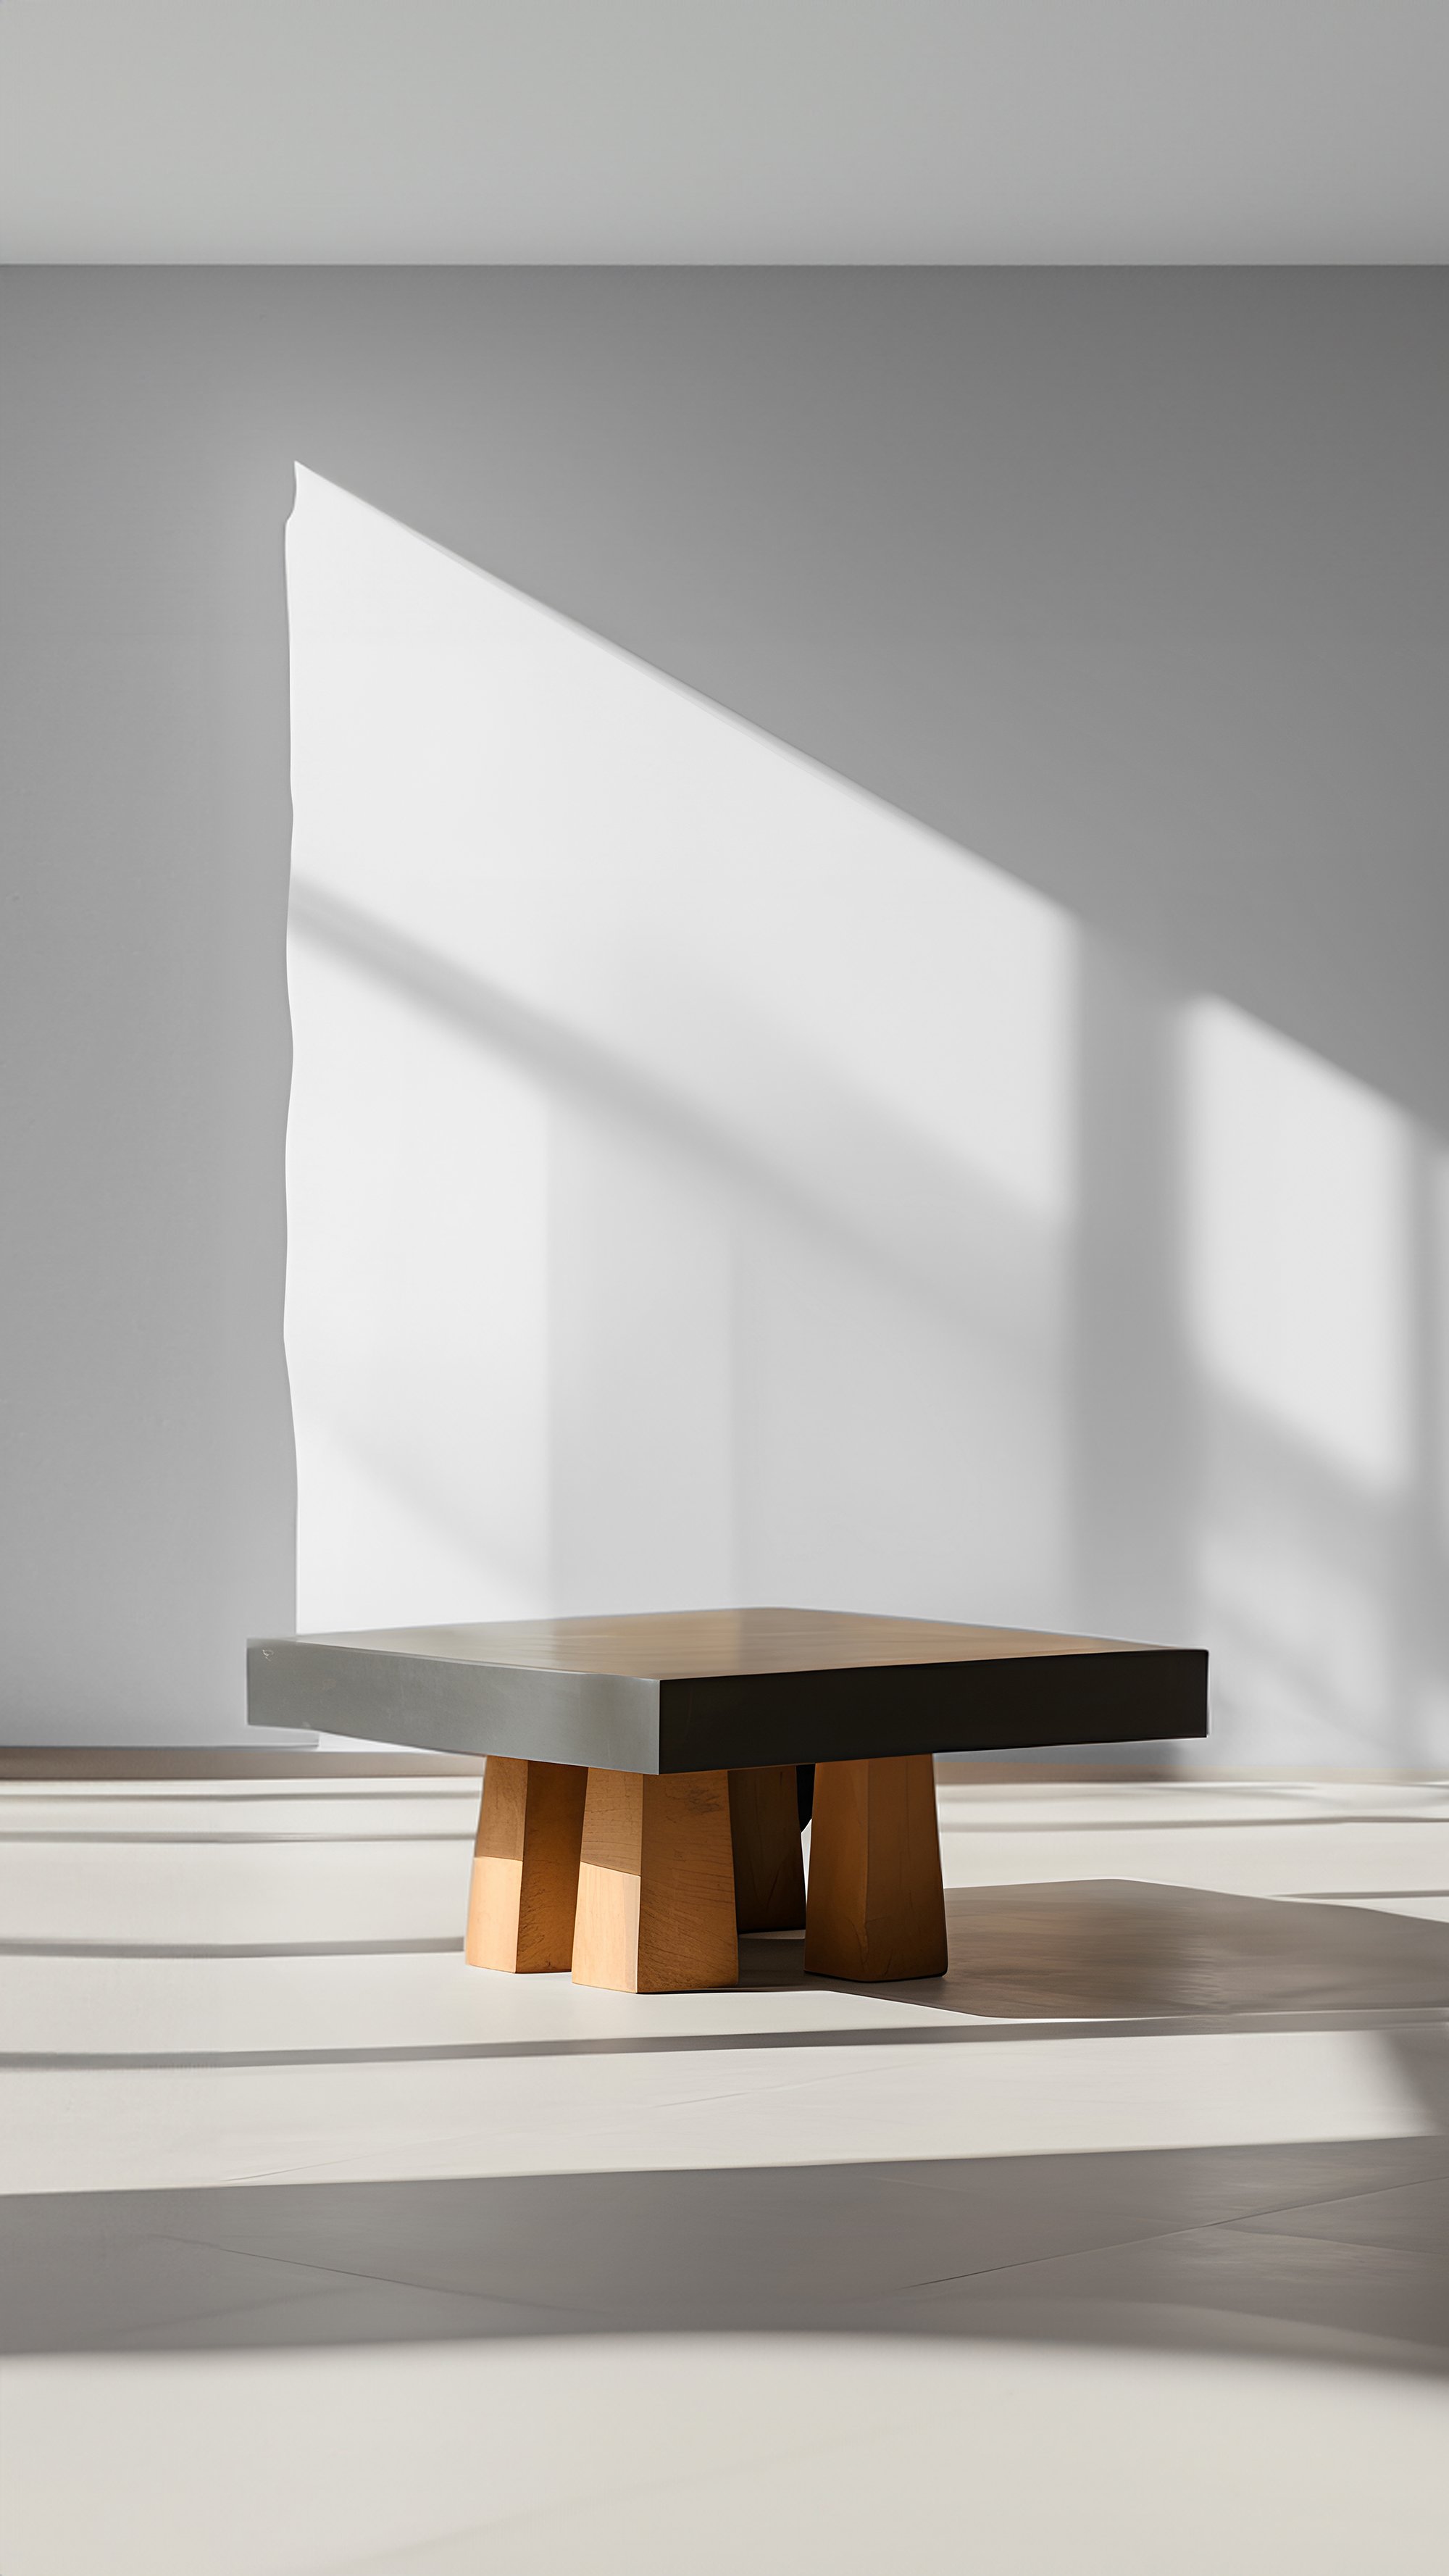 Duo-Tone Square Coffee Table - Dynamic Fundamenta 35 by NONO — 7.jpg